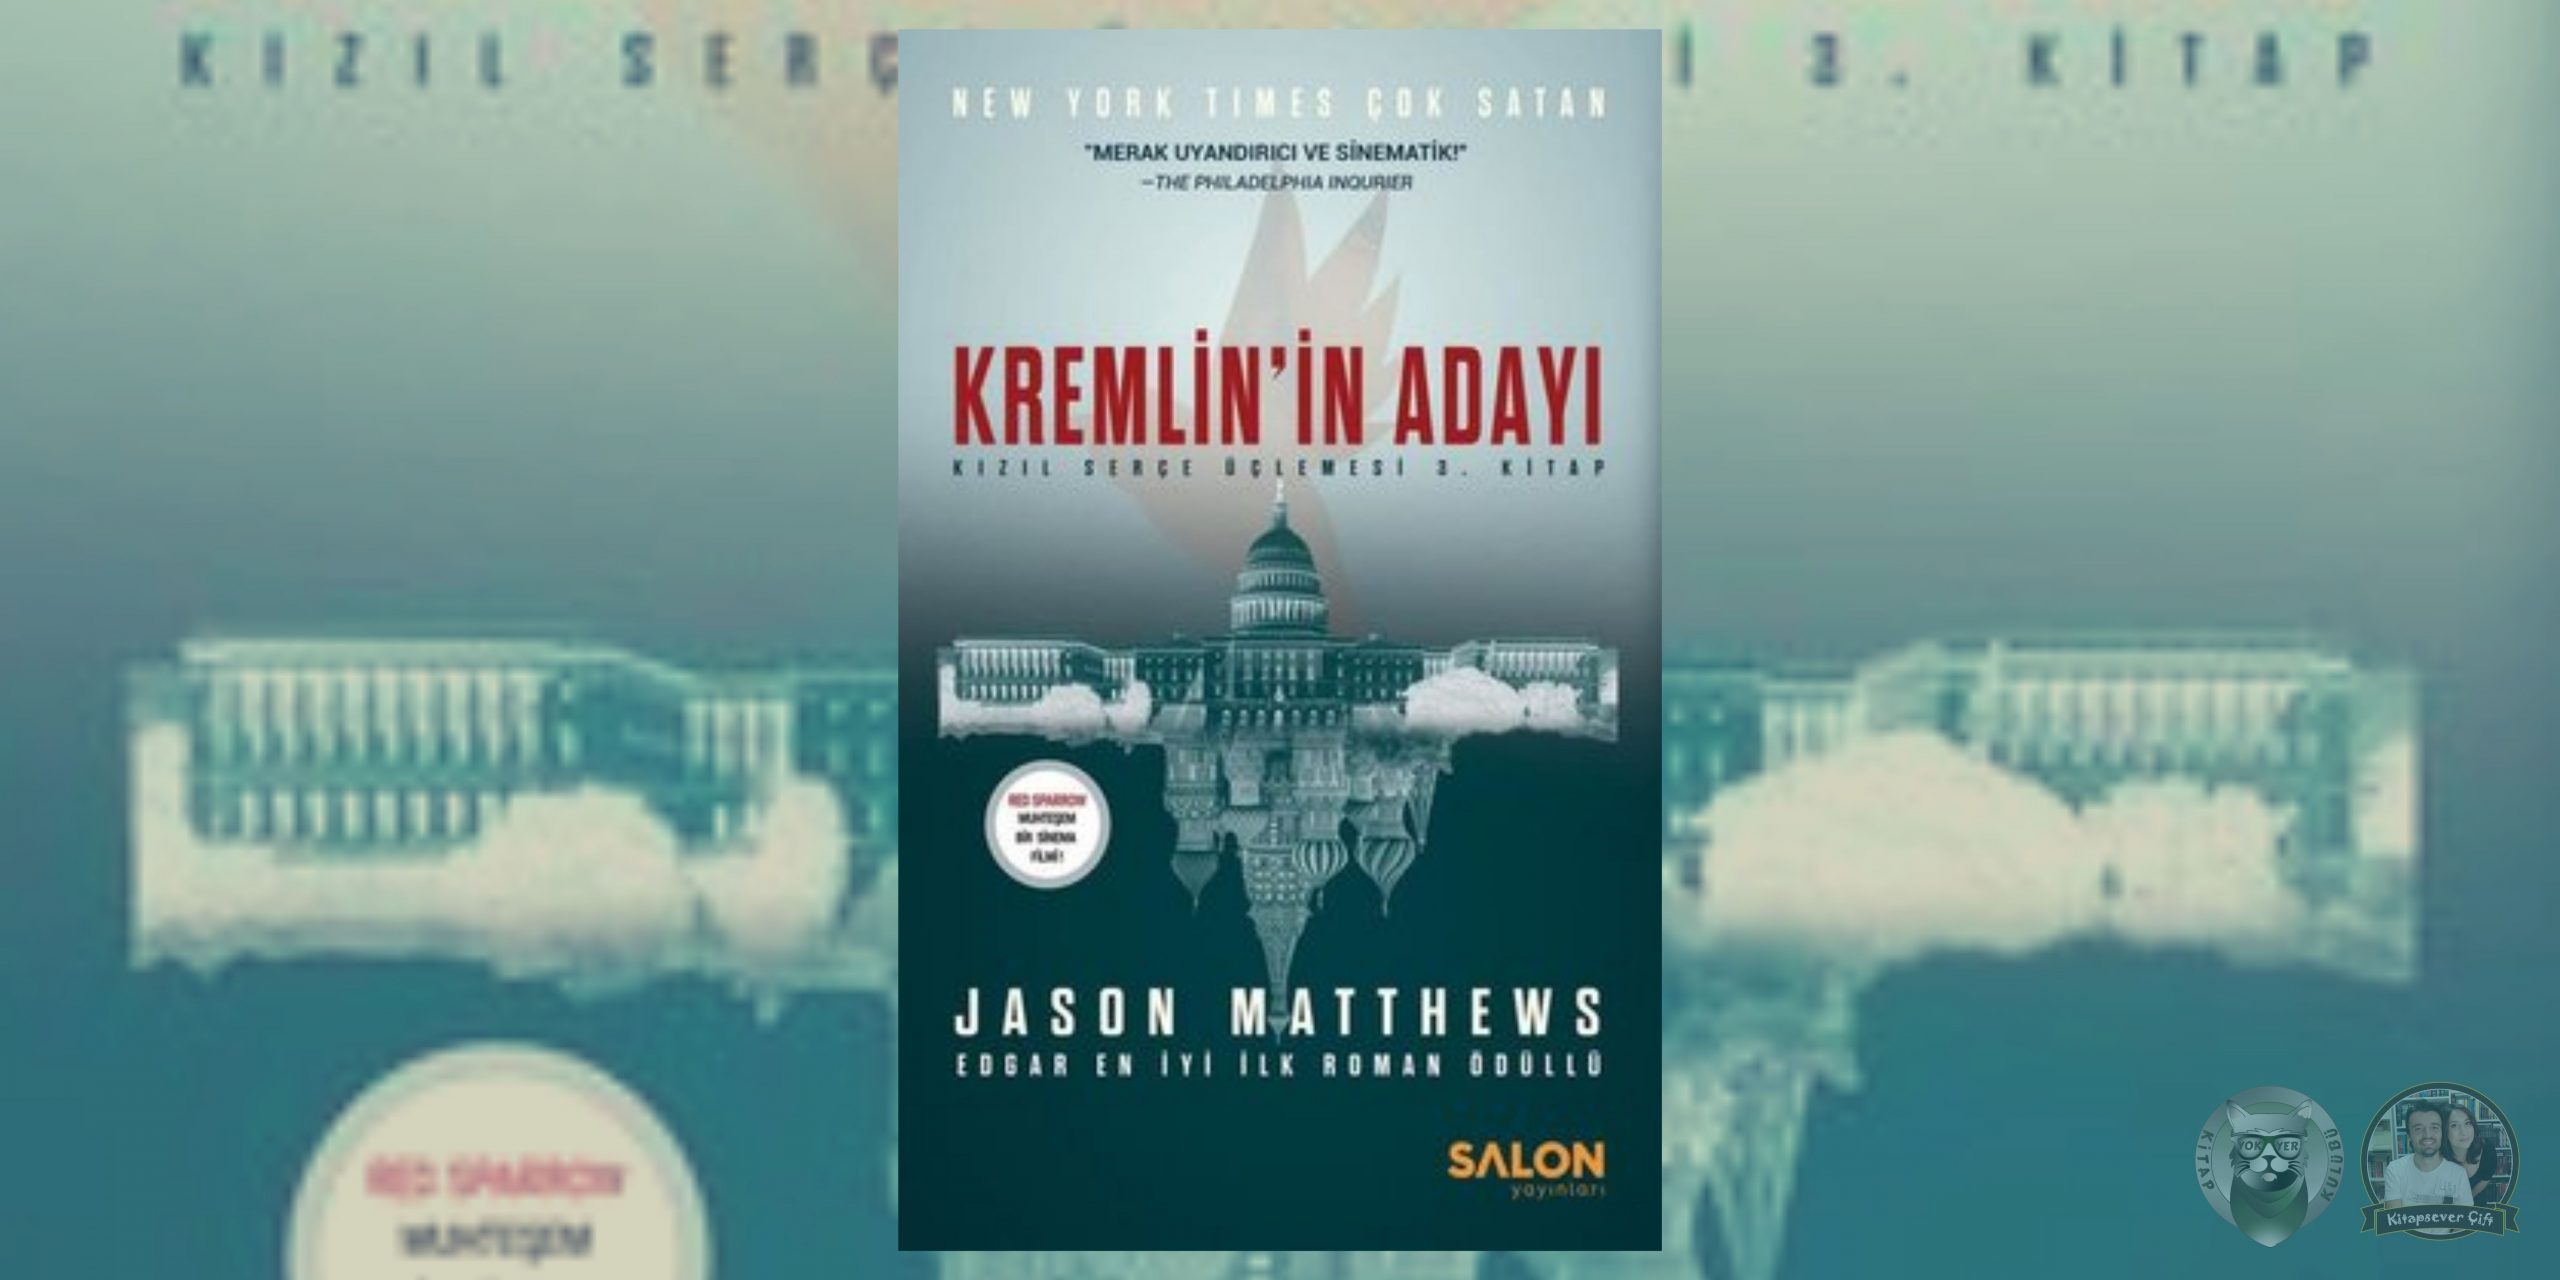 jason matthews - kızıl serçe serisi 3 – kremlinin adayi scaled